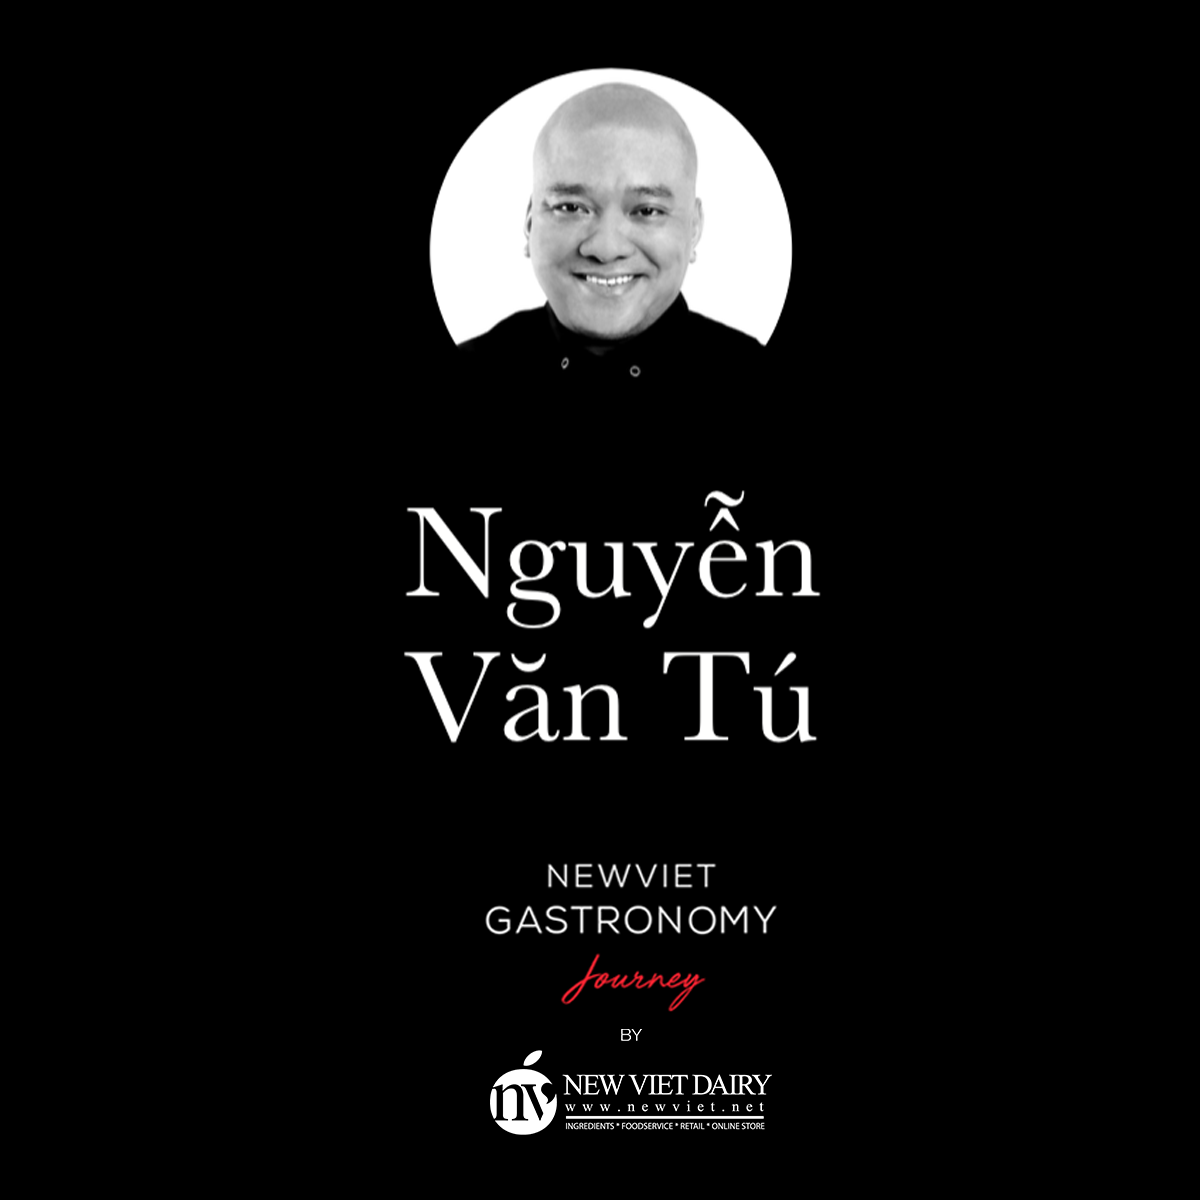 IRON CHEF VIETNAM NGUYEN VAN TU AT “THE NEW VIET GASTRONOMY JOURNEY”